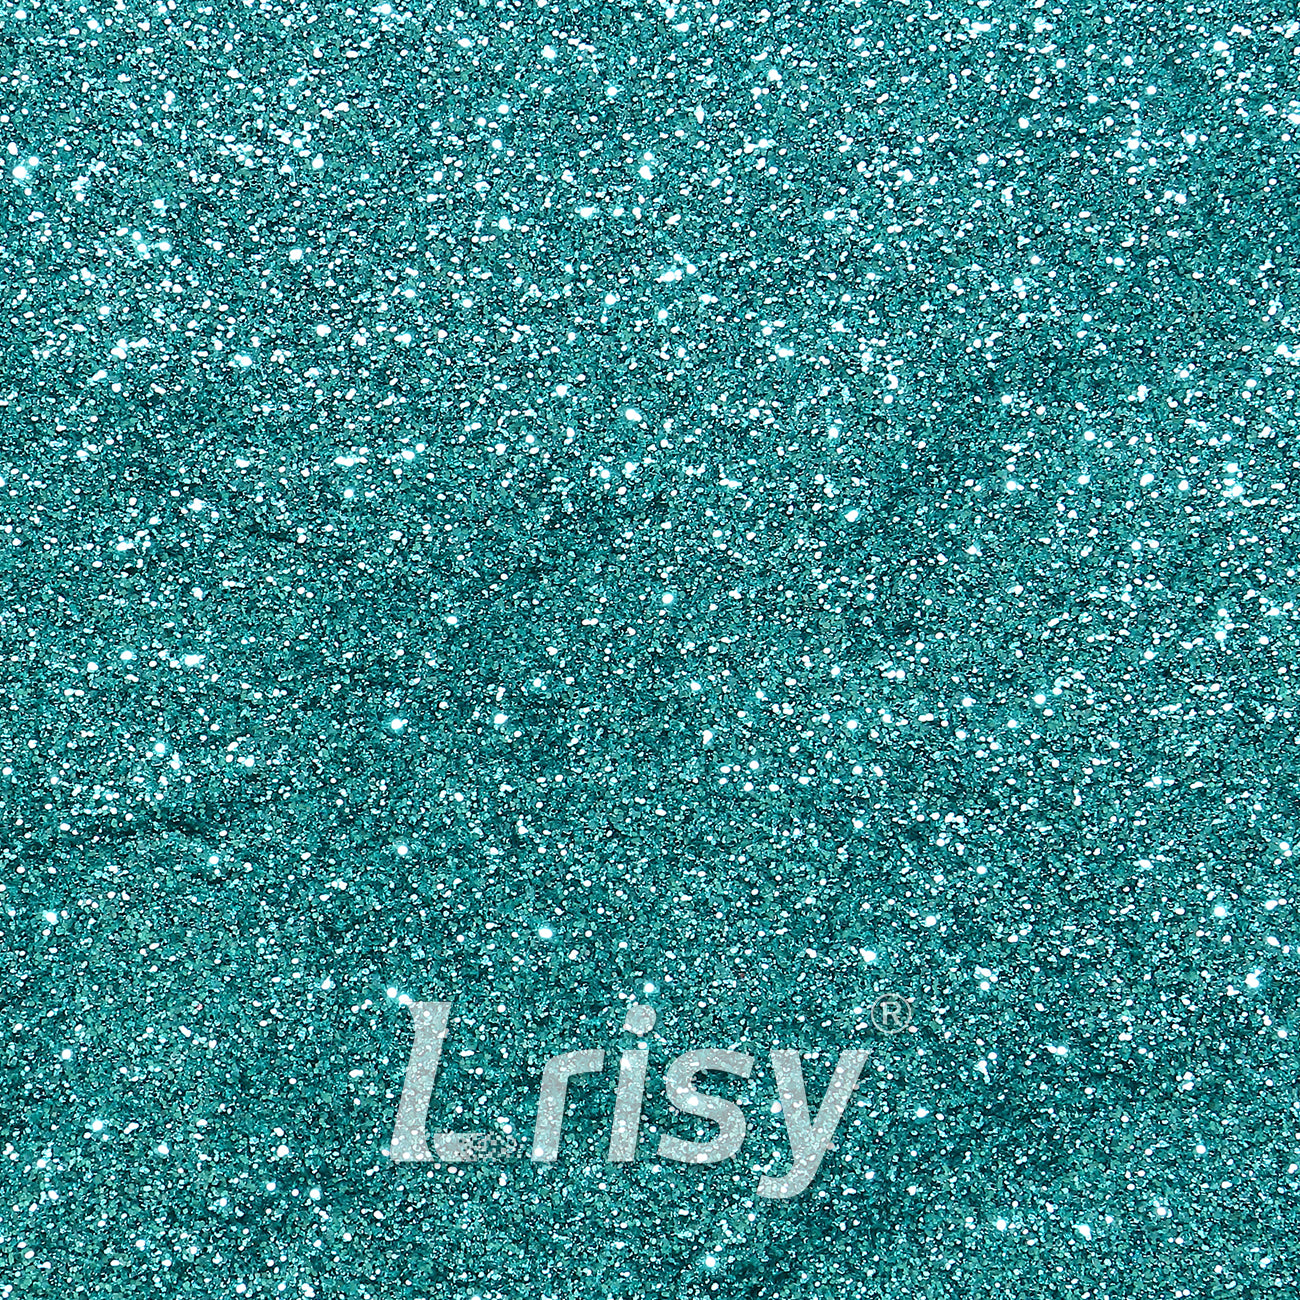 Lrisy Extra Fine Powder Metallic Glitter 140g/4.5oz with Shaker Lid(Extra Thin Teal Green/B0702)